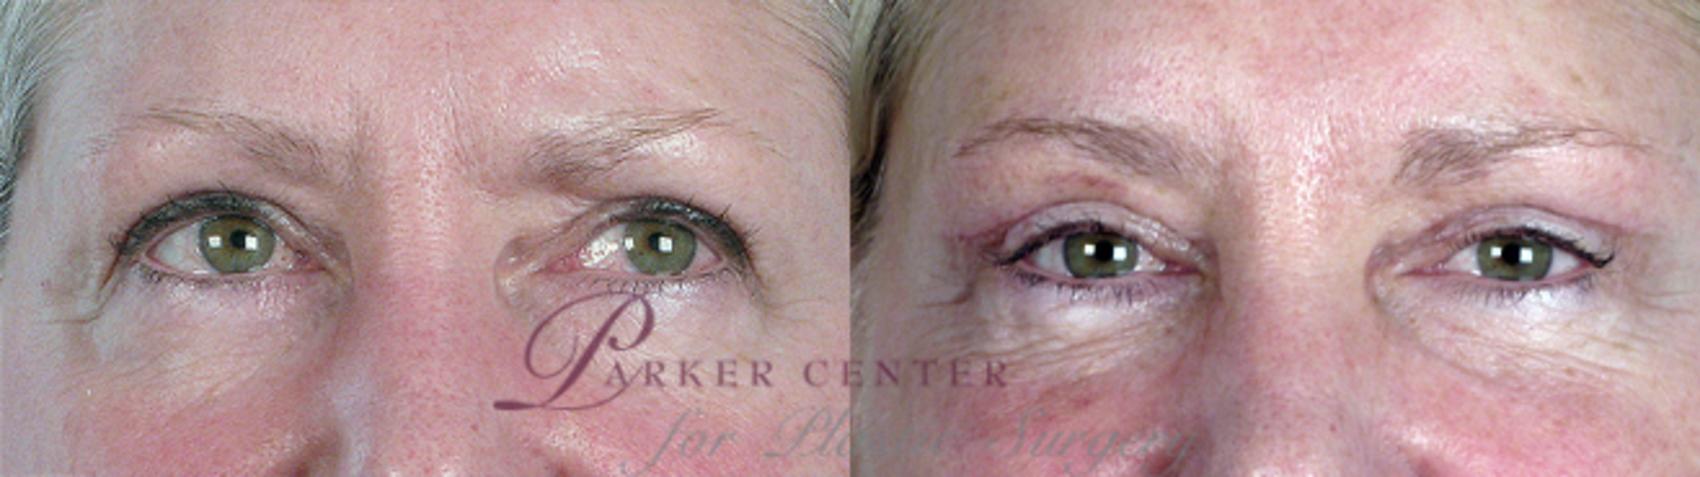 Eyelid Lift Case 62 Before & After View #1 | Paramus, NJ | Parker Center for Plastic Surgery